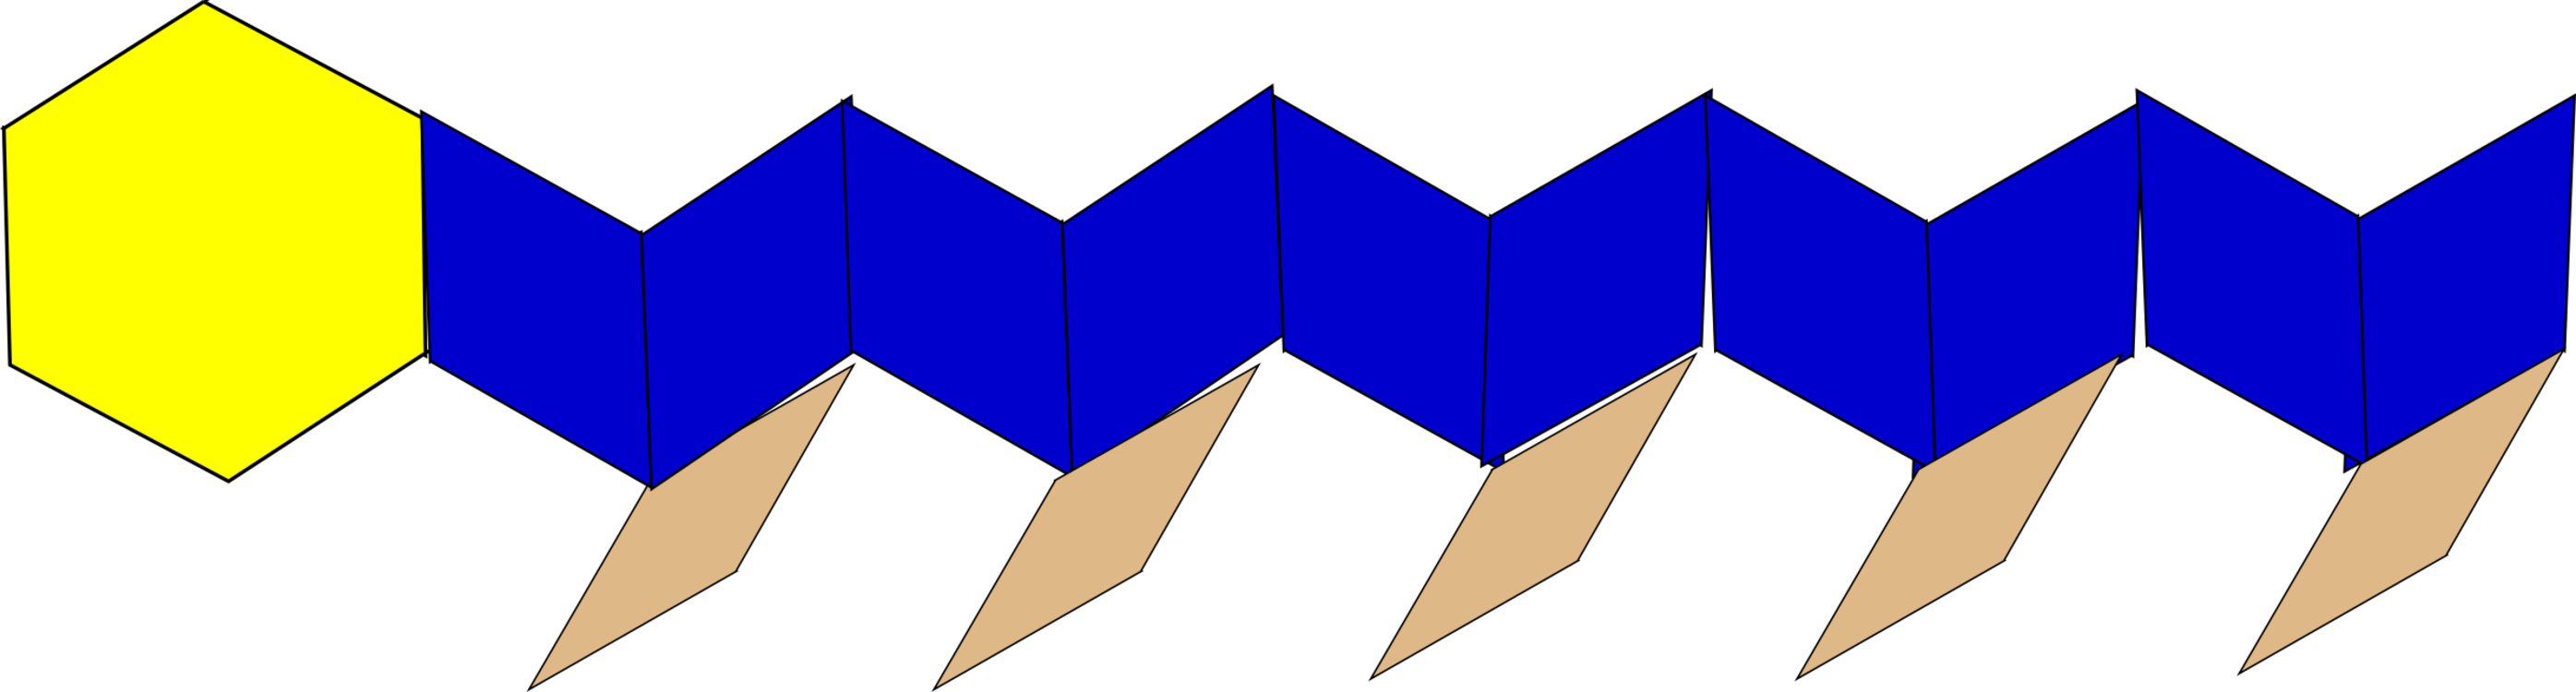 Triangle,Symmetry,Angle